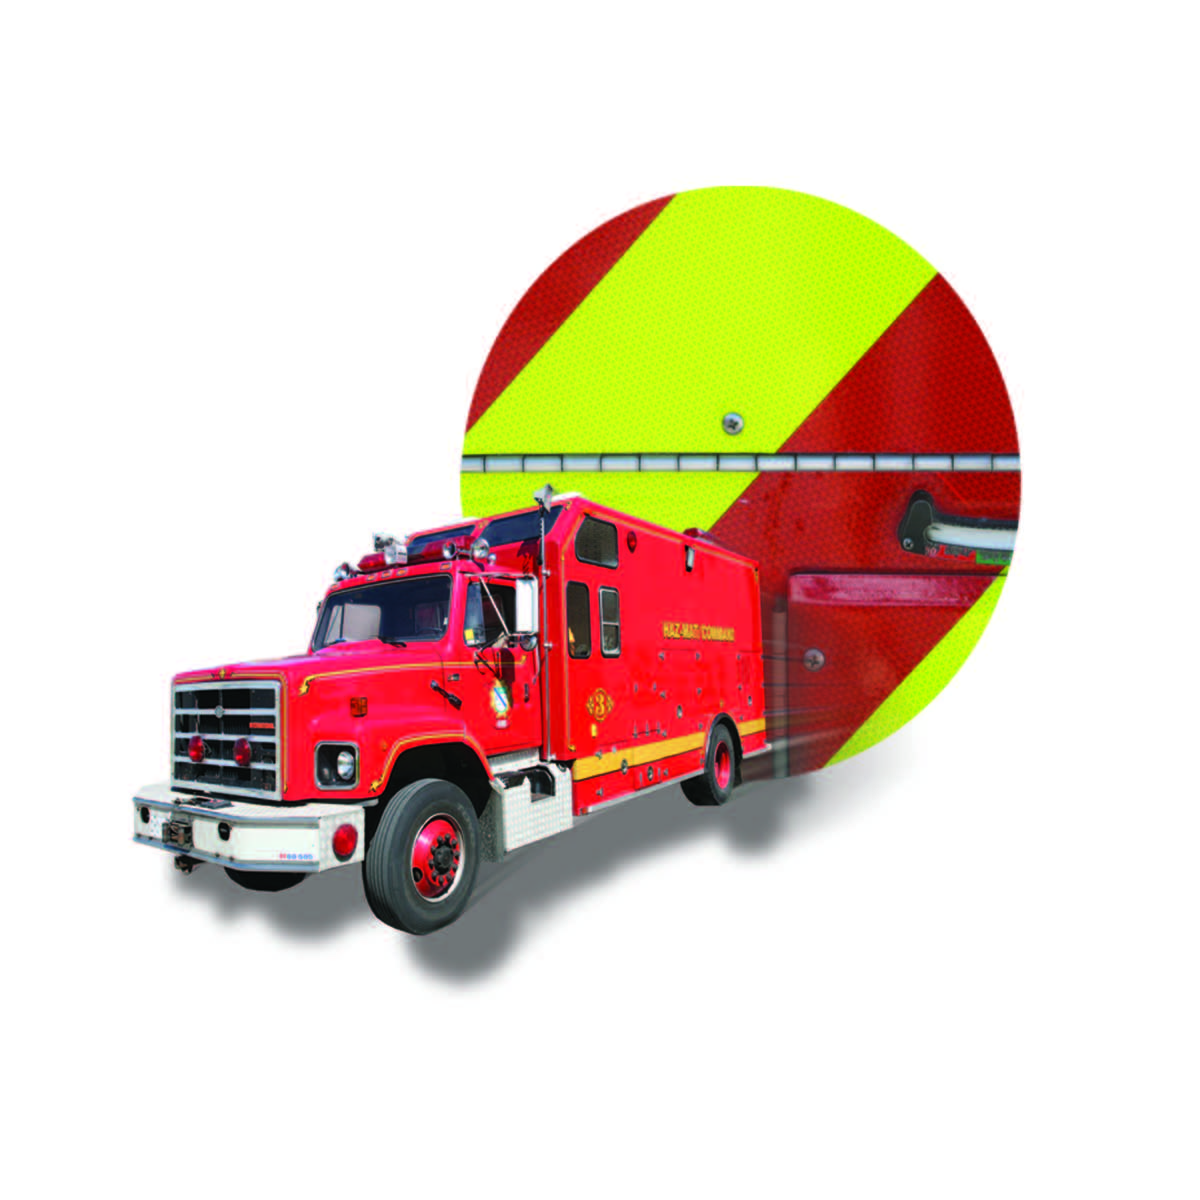 Emergency Vehicle Hinges - Fire Truck